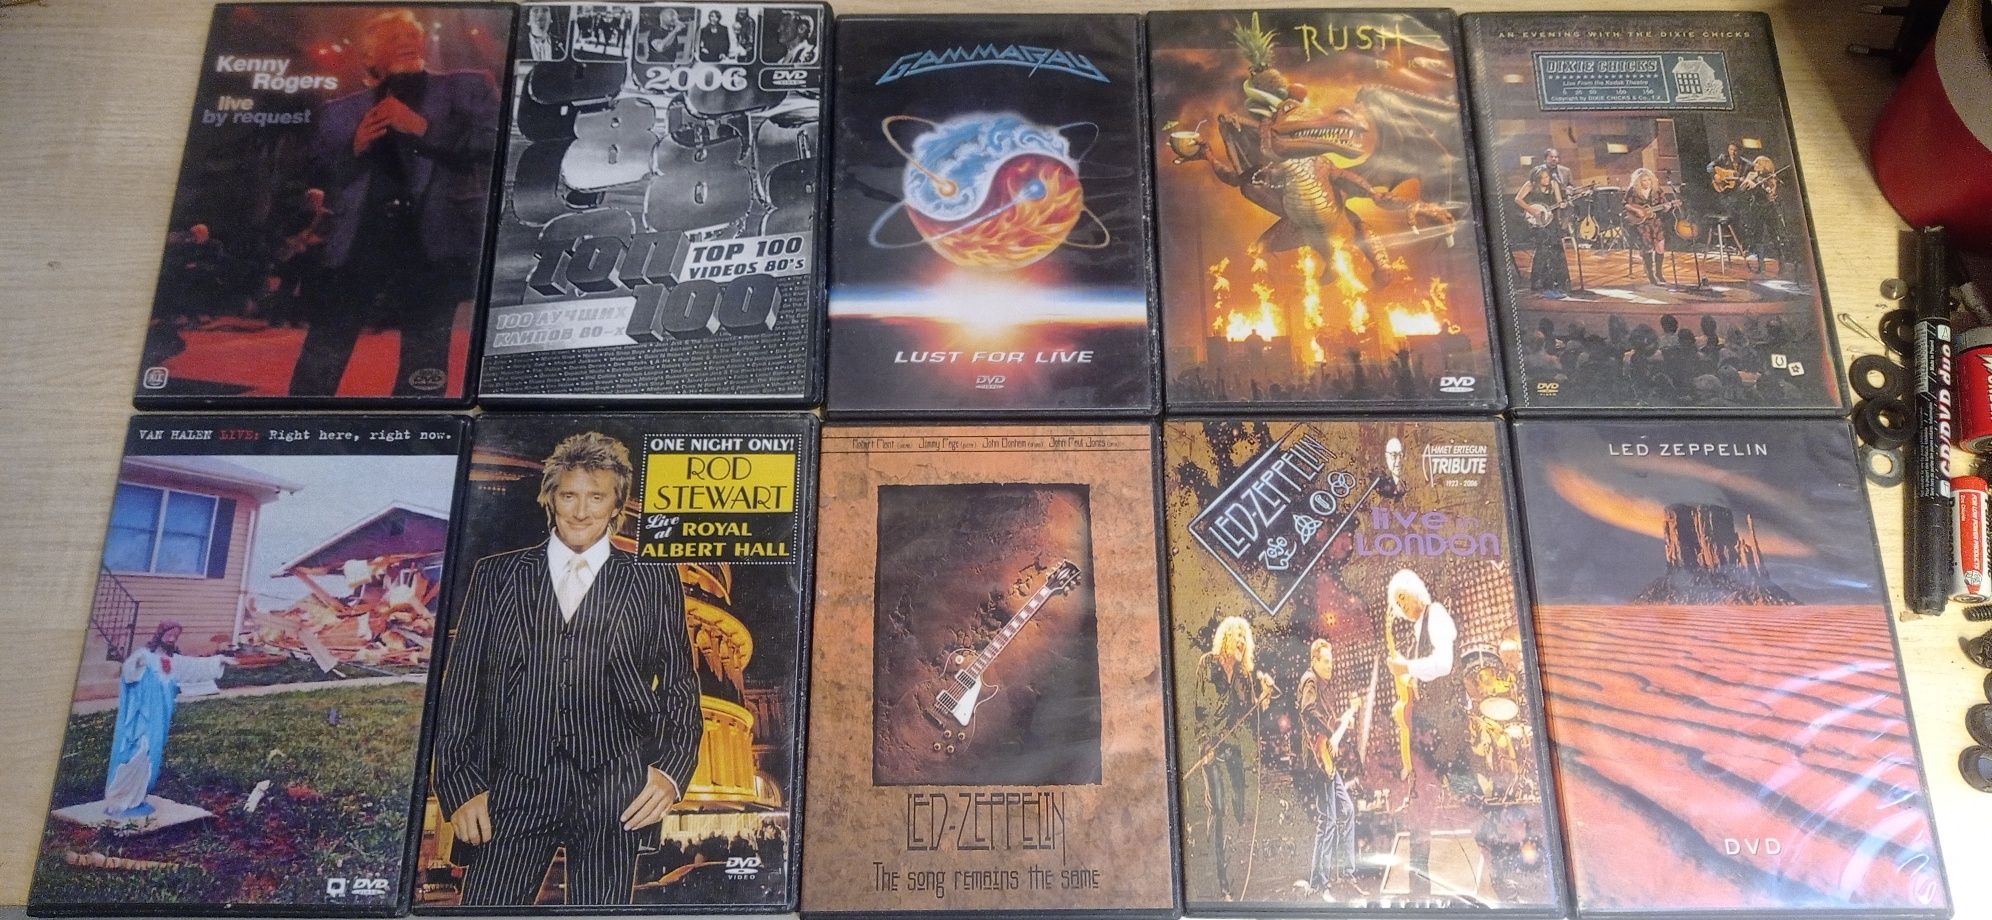 Koncerty DVD, kasety VHS video, firmy DVD